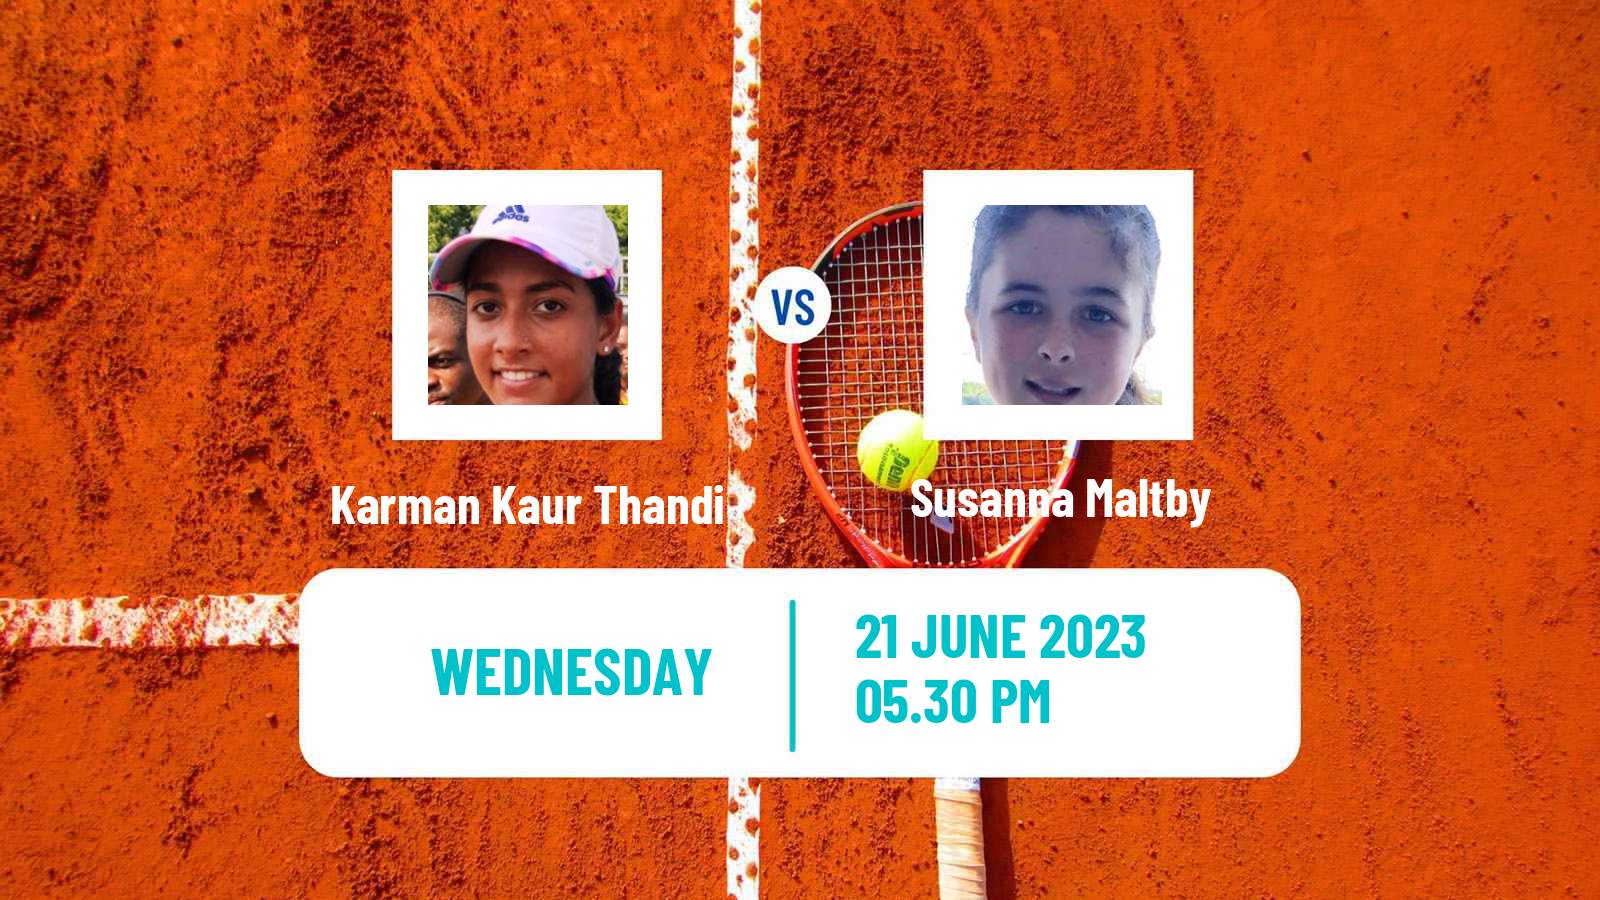 Tennis ITF W25 Wichita Ks Women Karman Kaur Thandi - Susanna Maltby